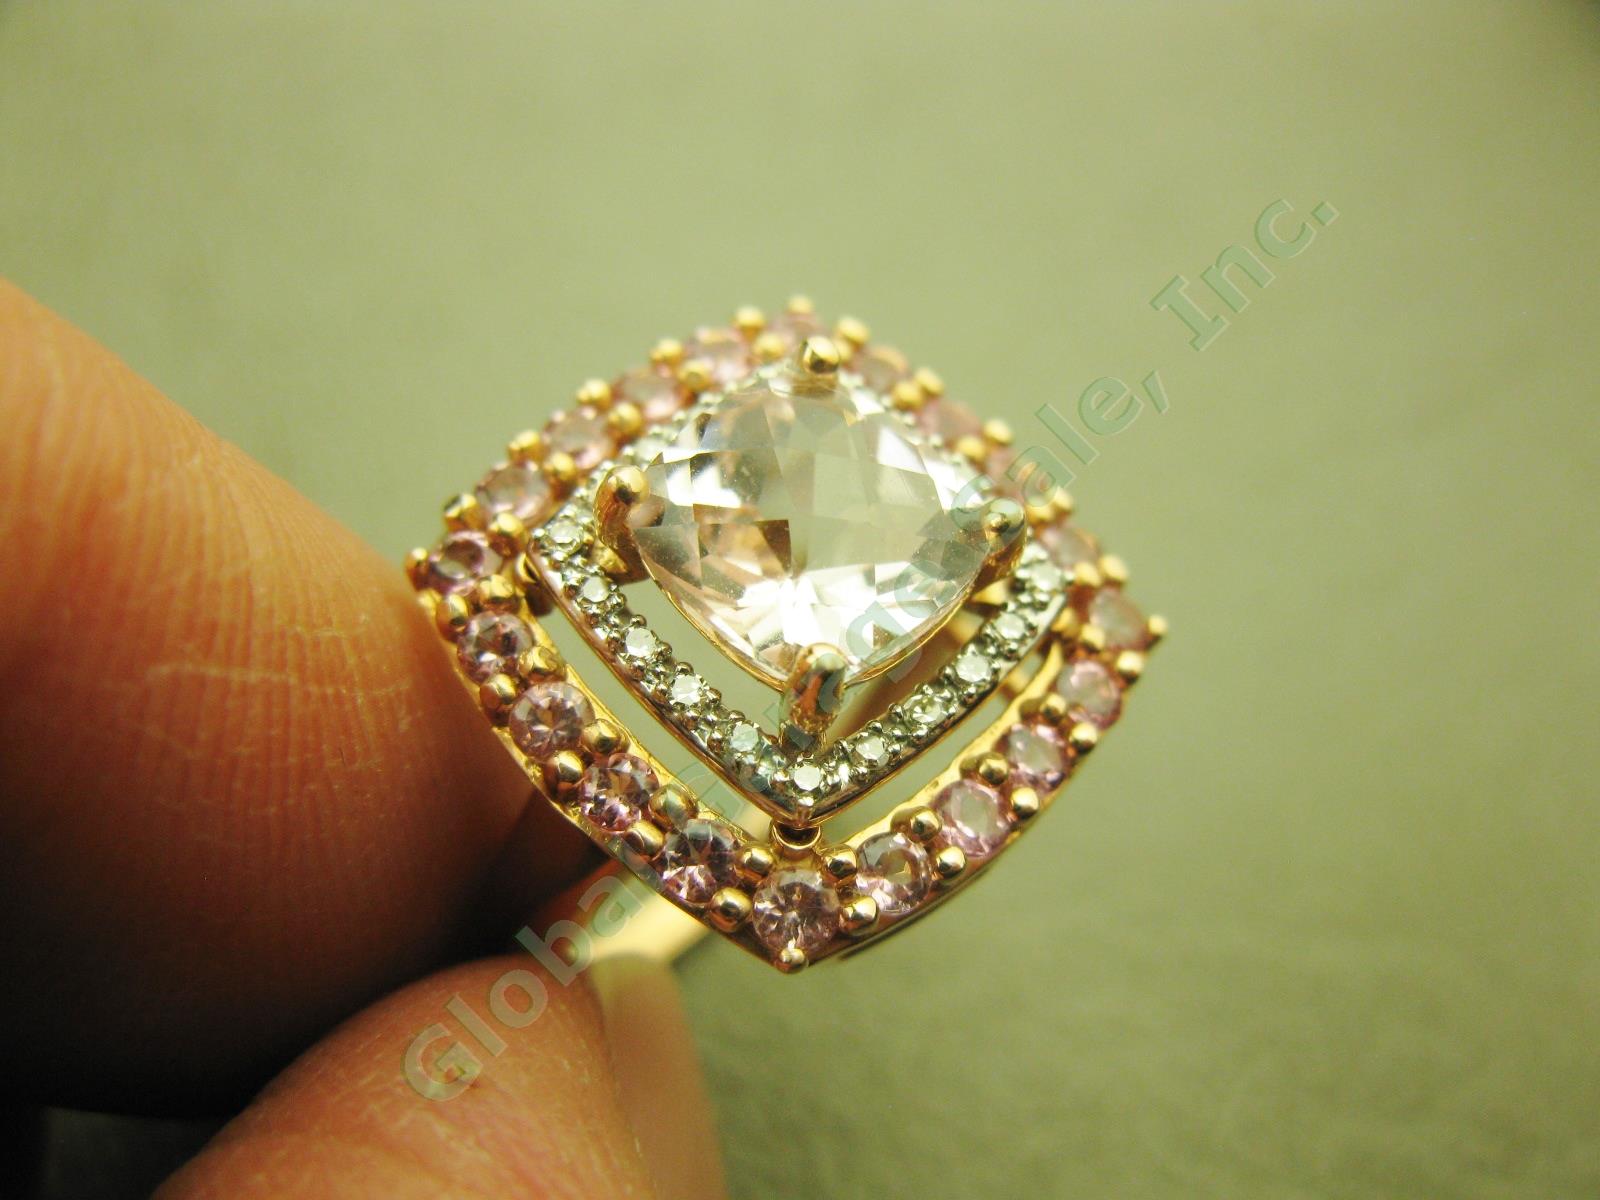 19x 14k 10k Gold Gemstone Rings Lot Earrings 57.7 Grams Not Scrap $1200+ Value!! 18